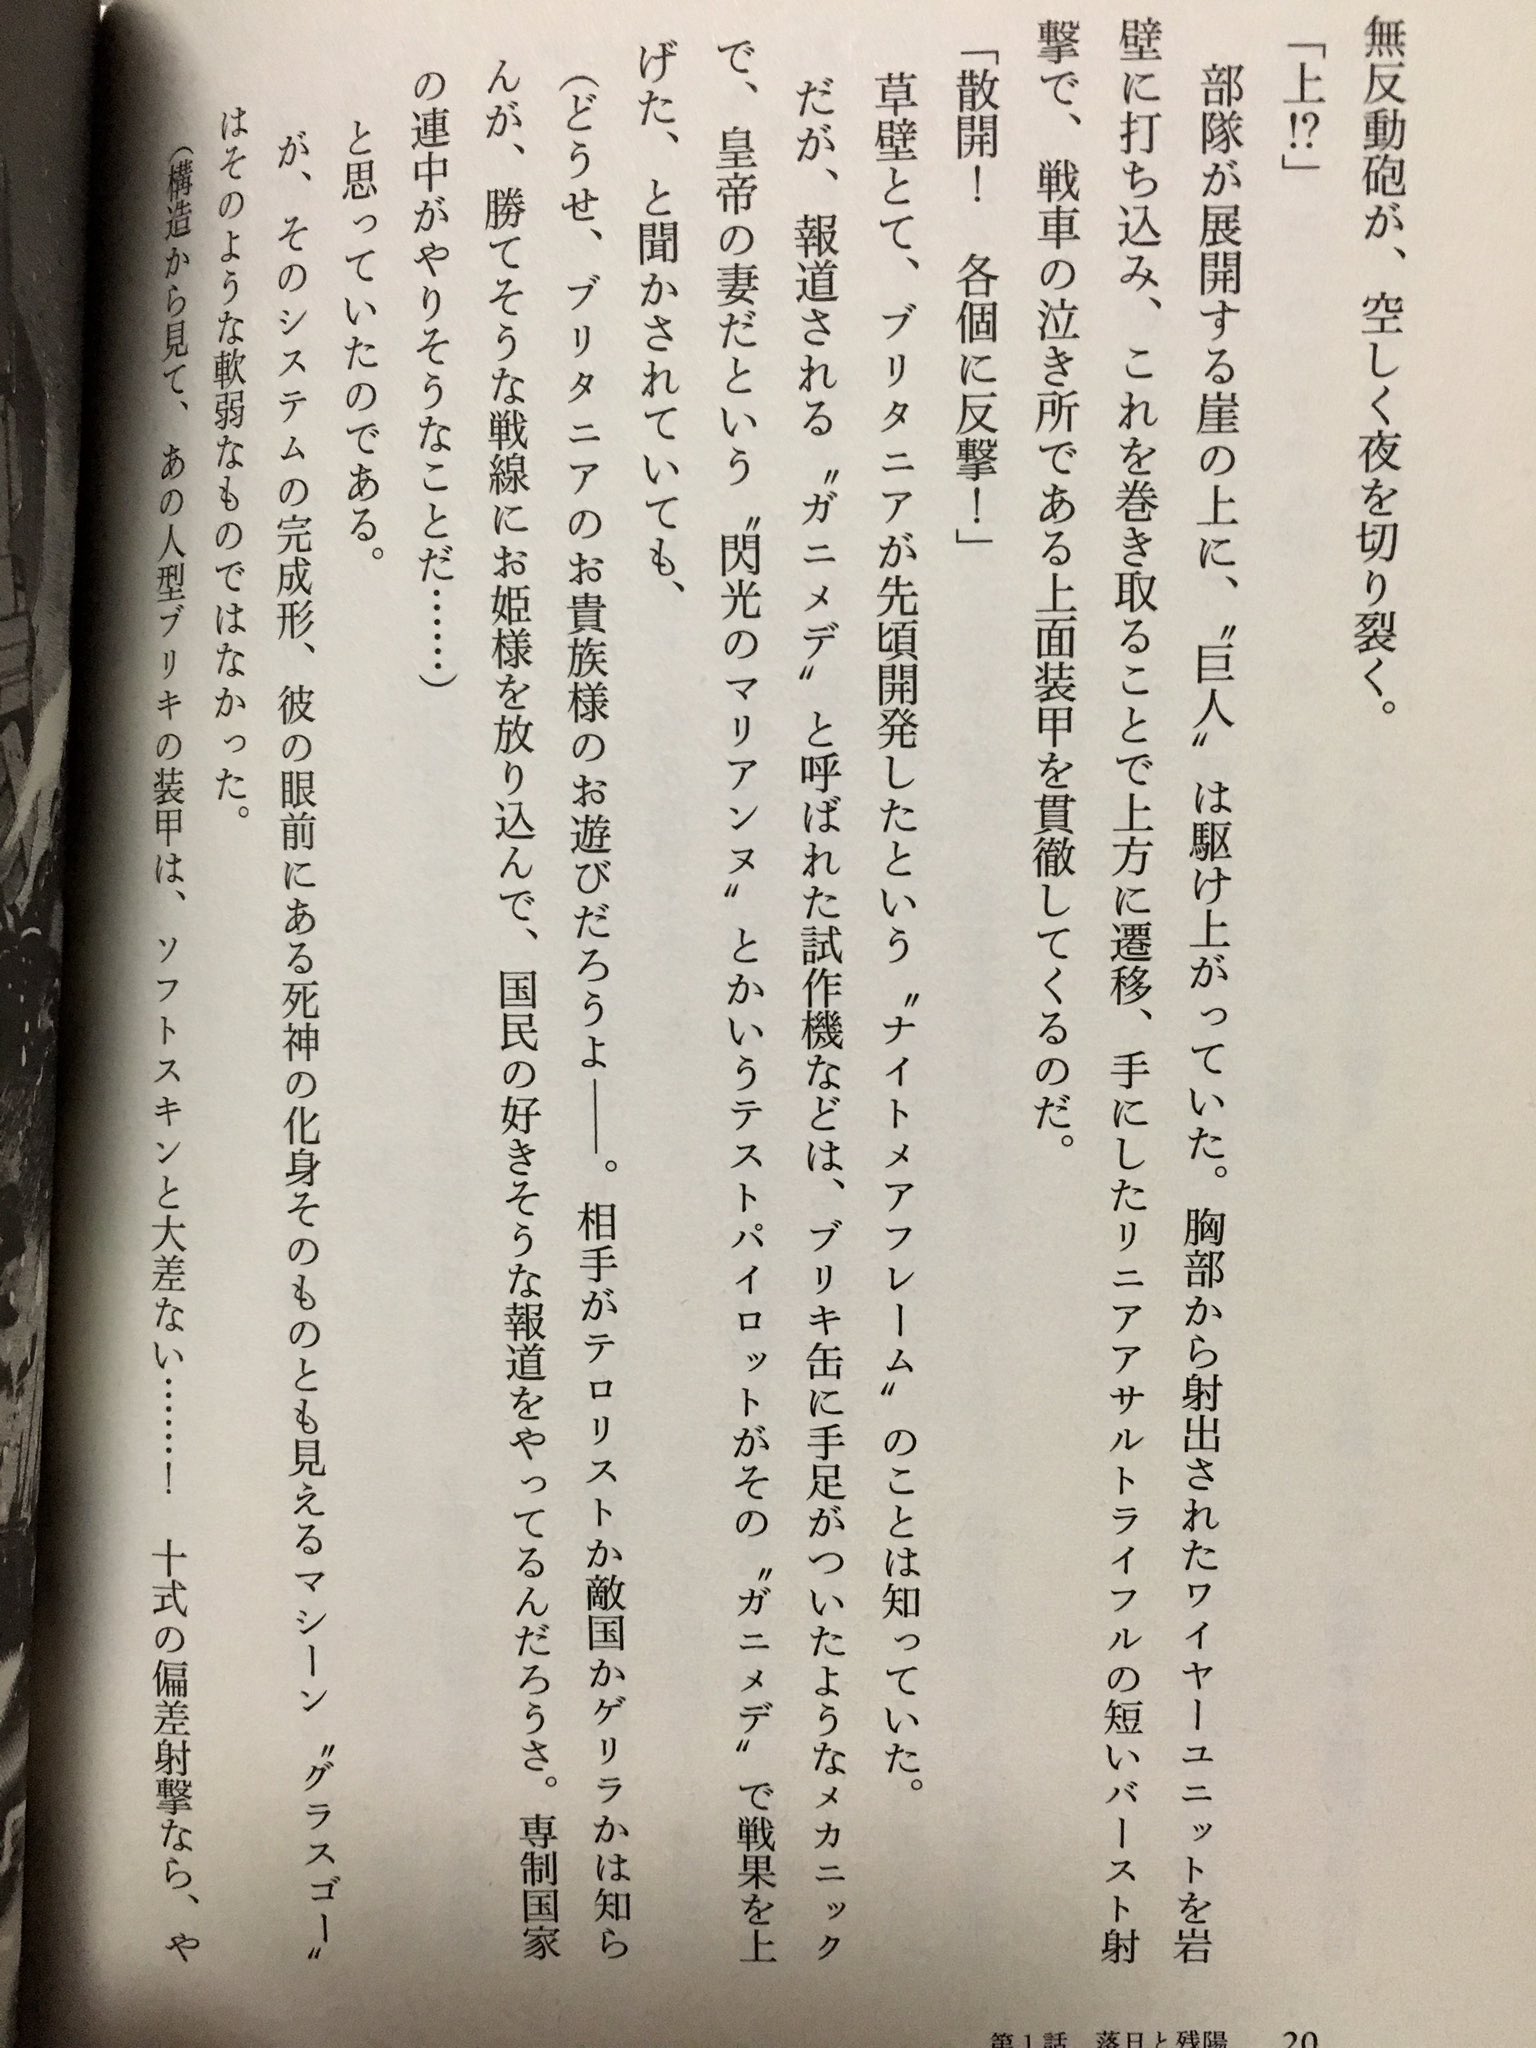 Yoshiyuki R Fukai 小説版亡国のアキトでは 日本軍側からの戦闘描写があります 草壁中佐はホテルジャックの人と言えばわかるでしょうか T Co Fqr0wcuvbs Twitter